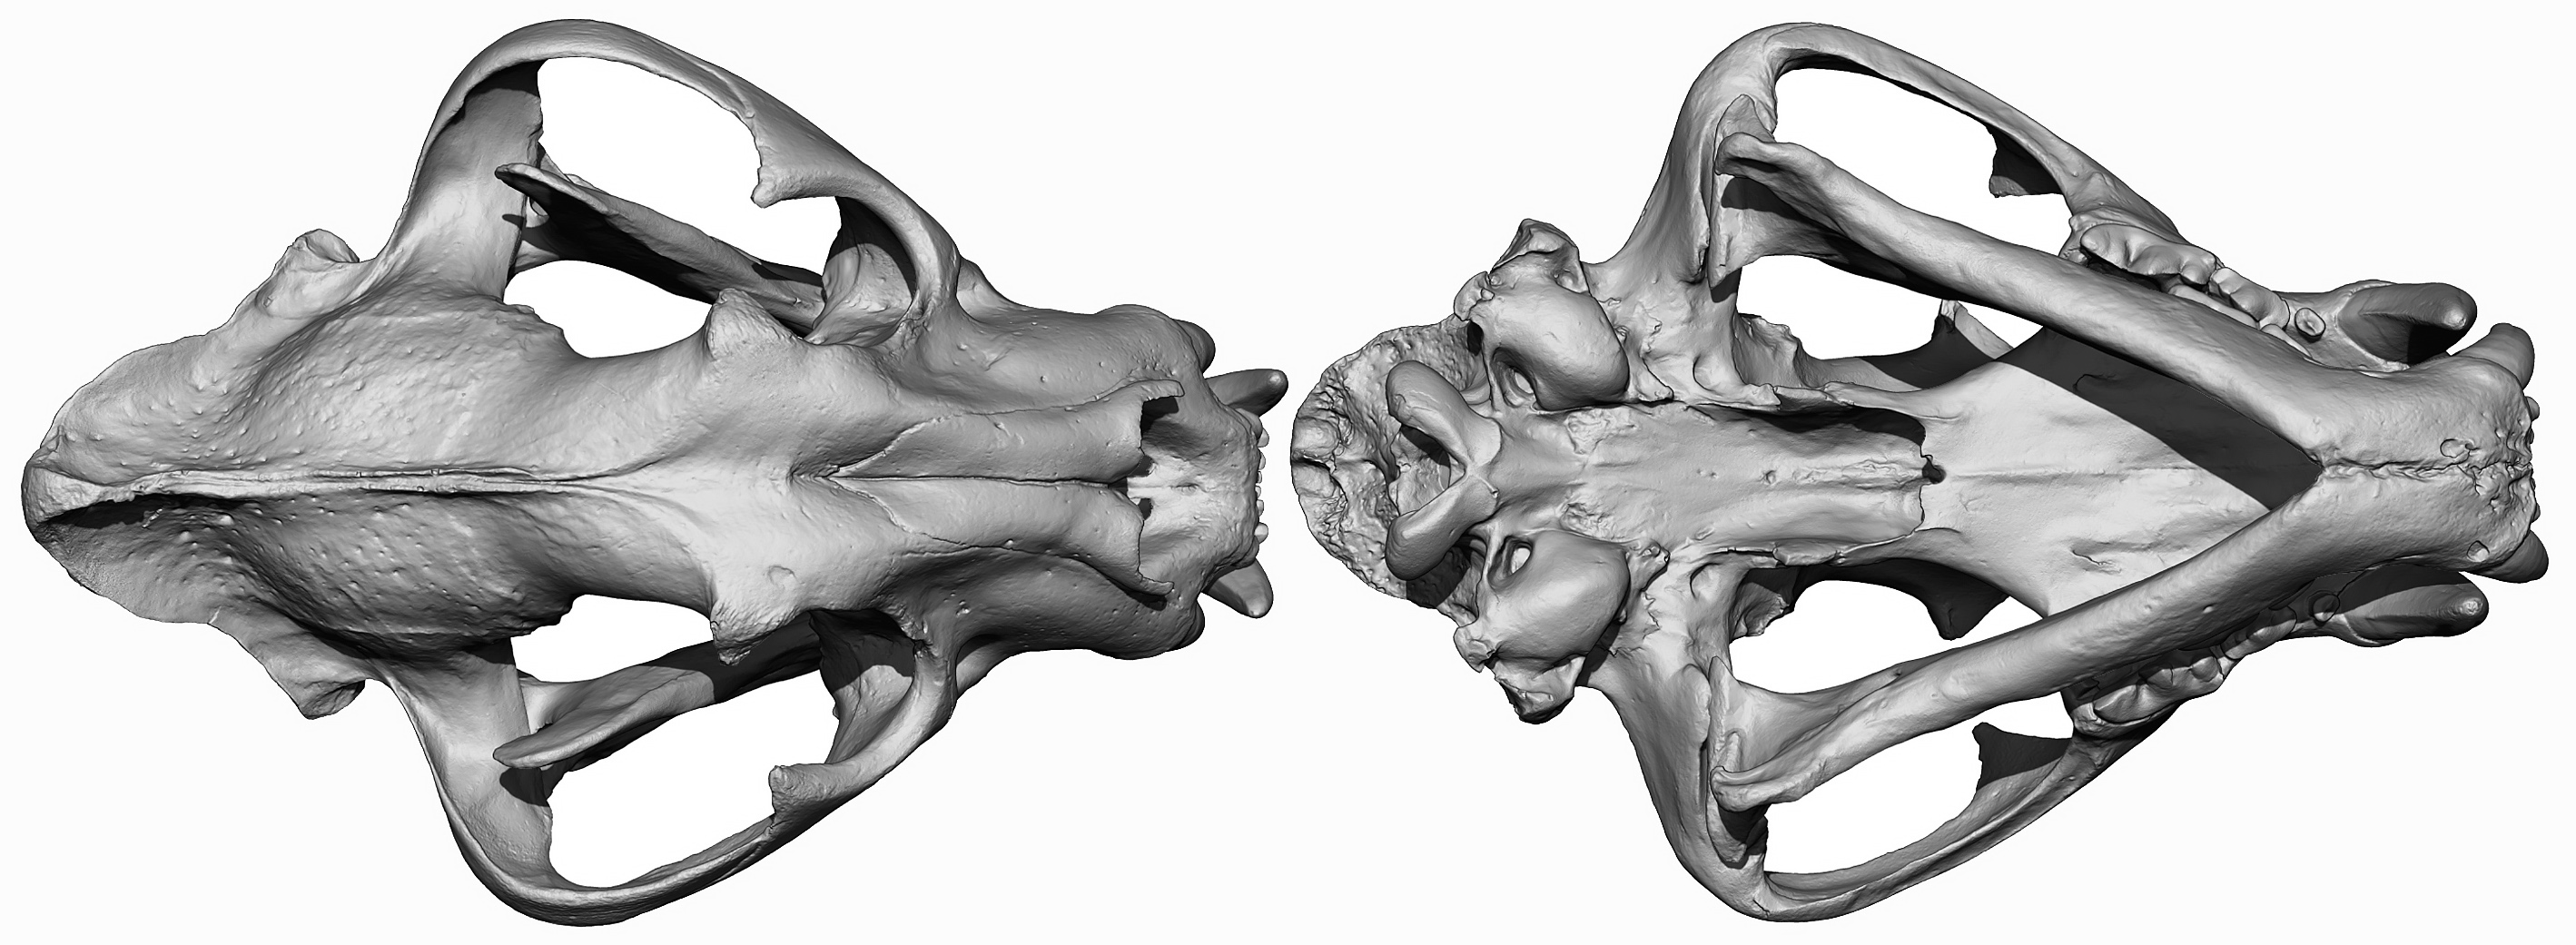 3D Tiger head model skull download